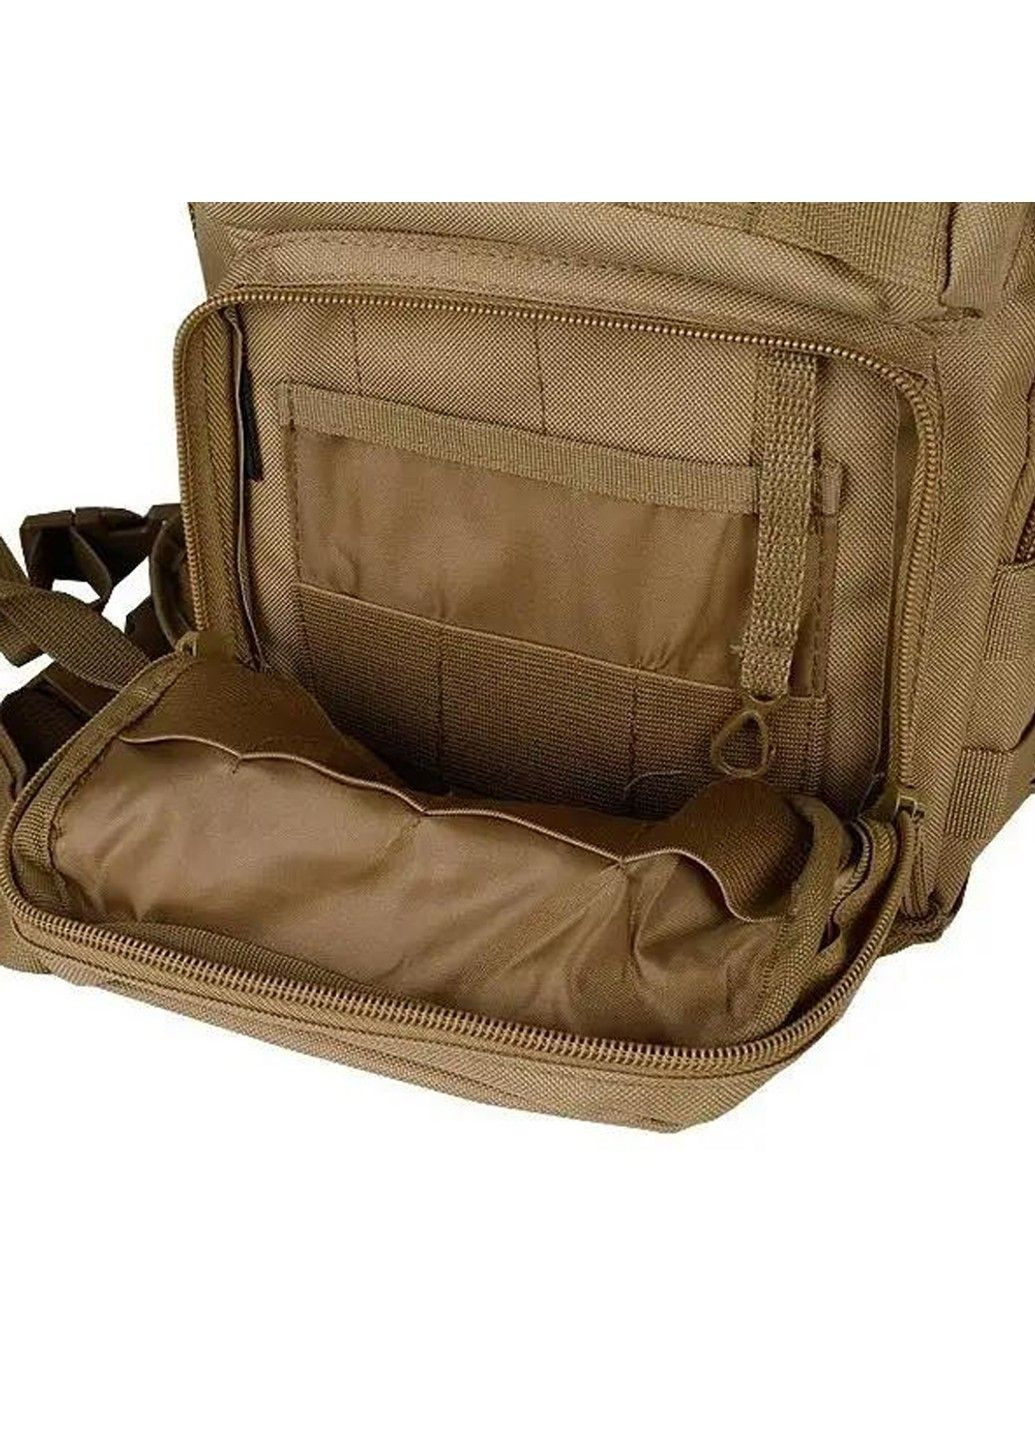 Однолямочный рюкзак 9 л с креплением Molle размер 30х22х13 см Mil-Tec (293269478)